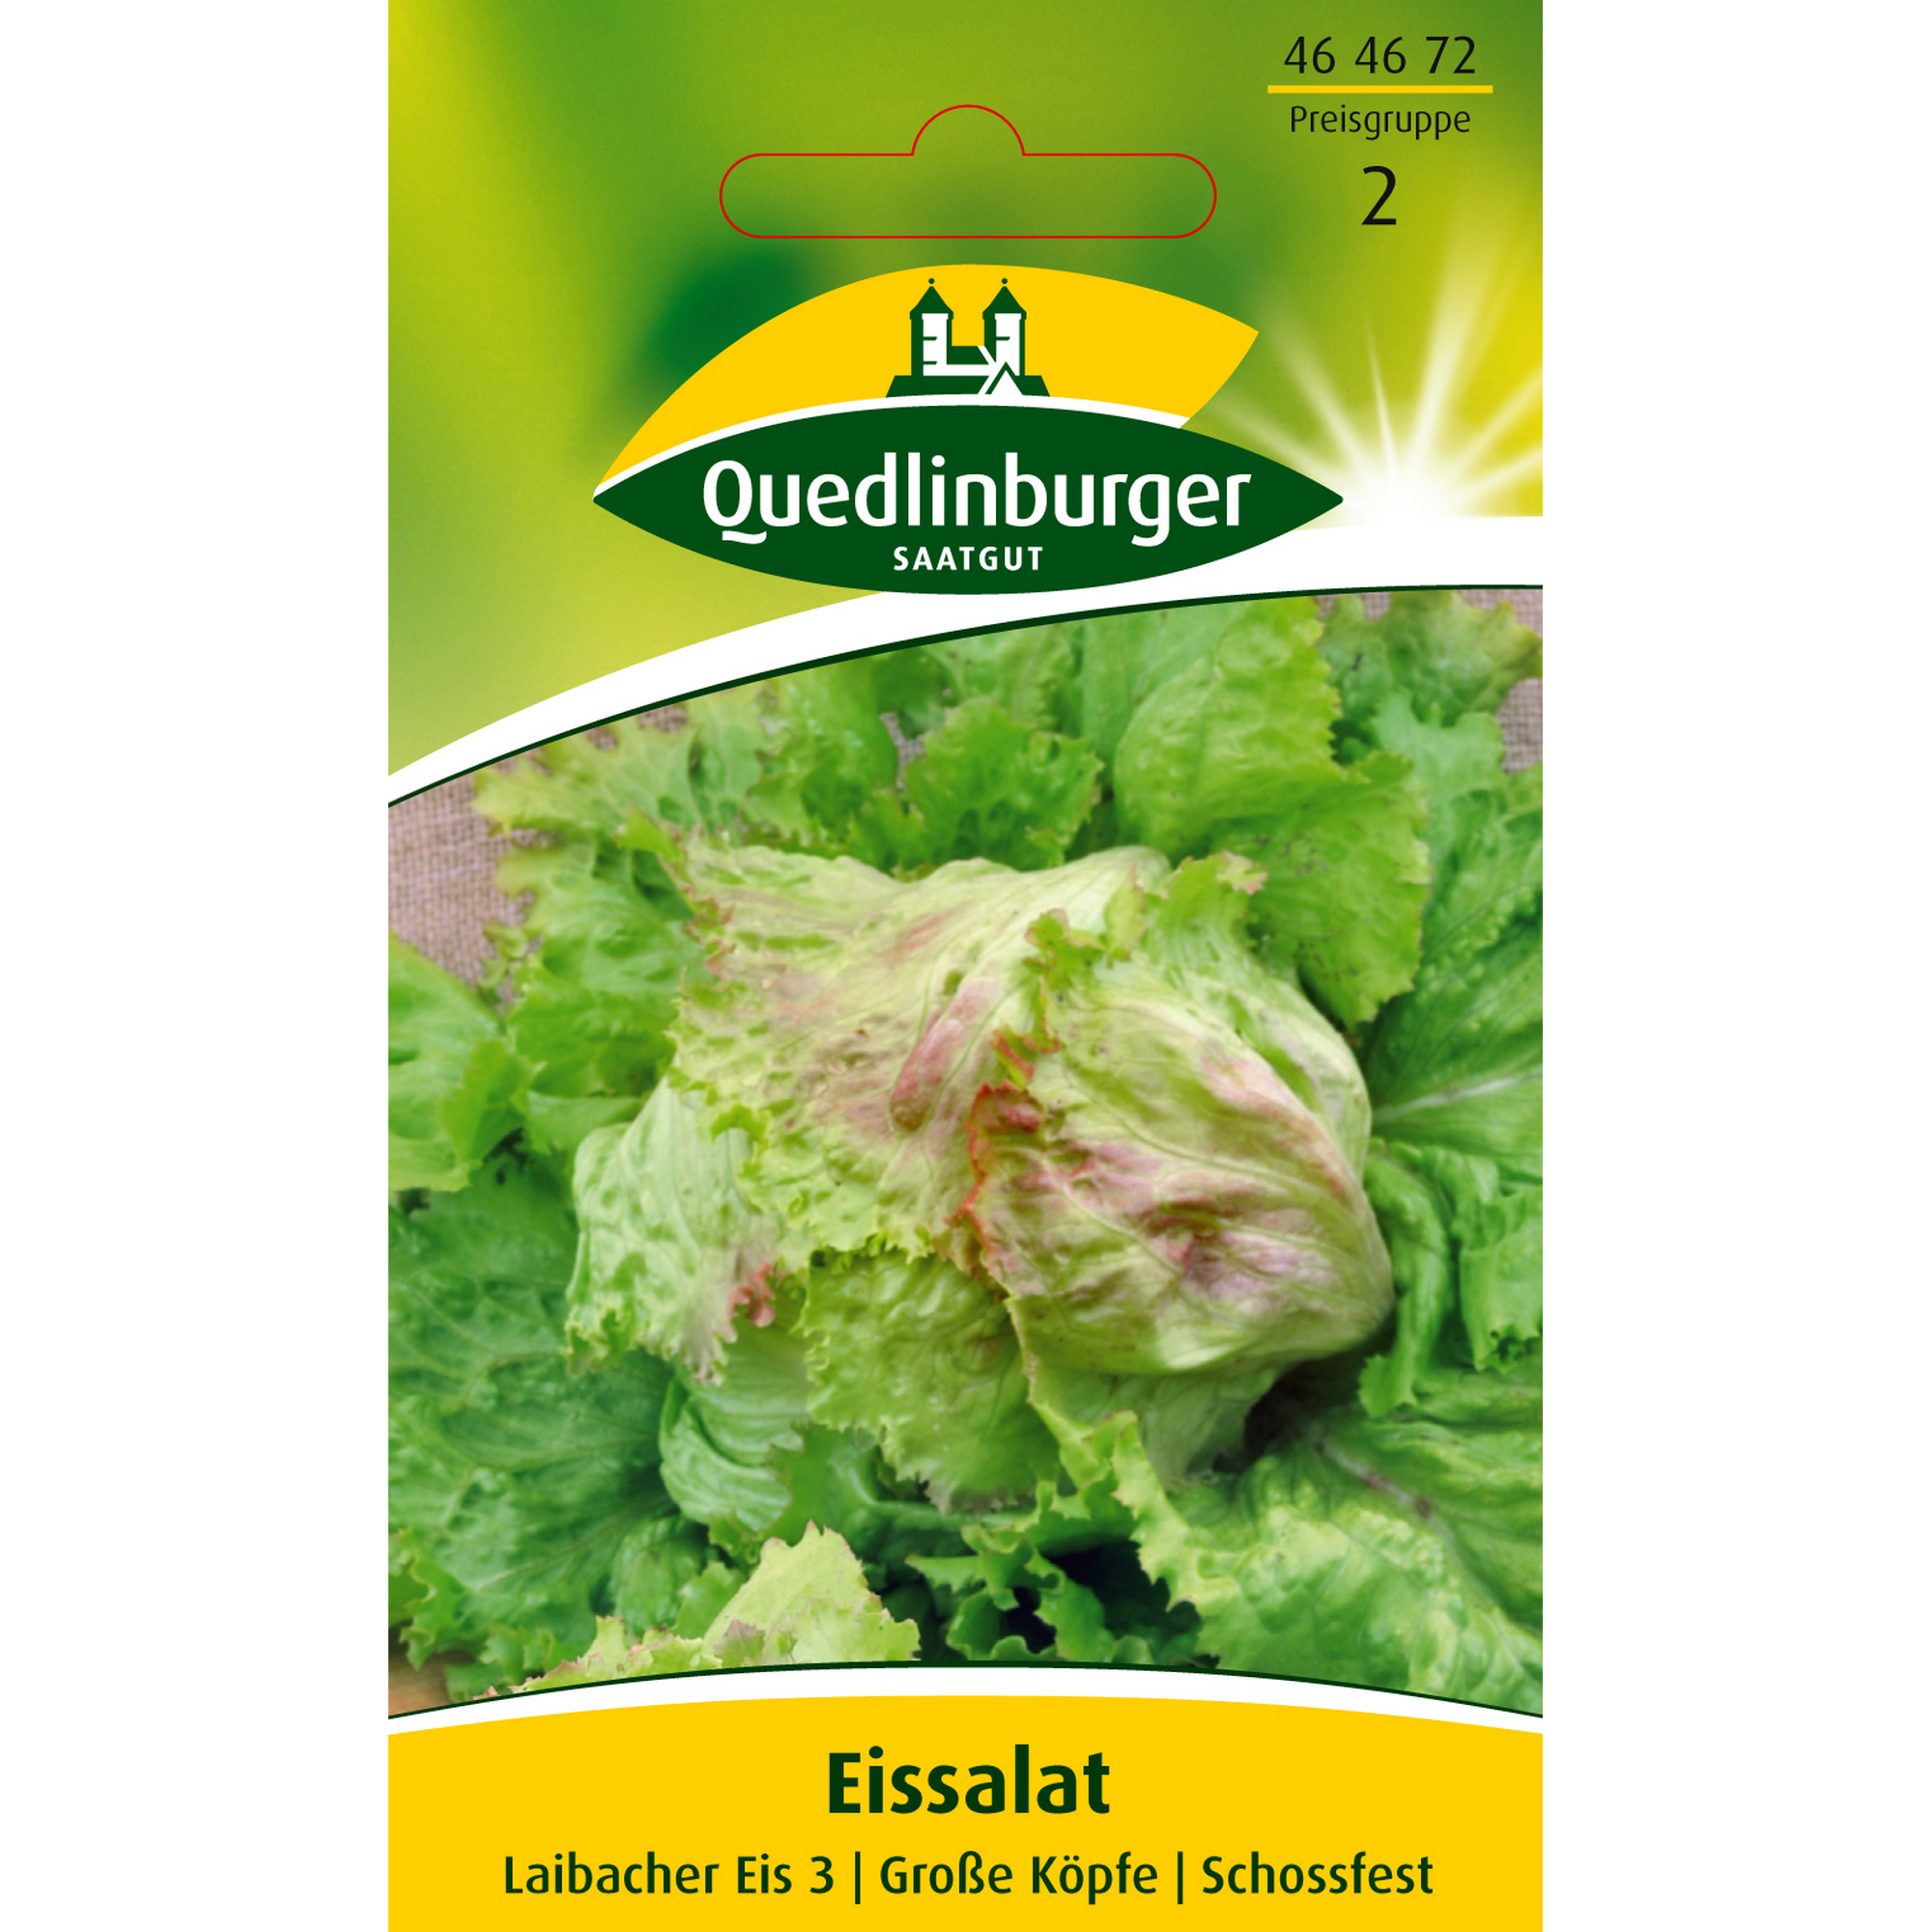 Eissalat 'Laibacher Eis 3' + product picture